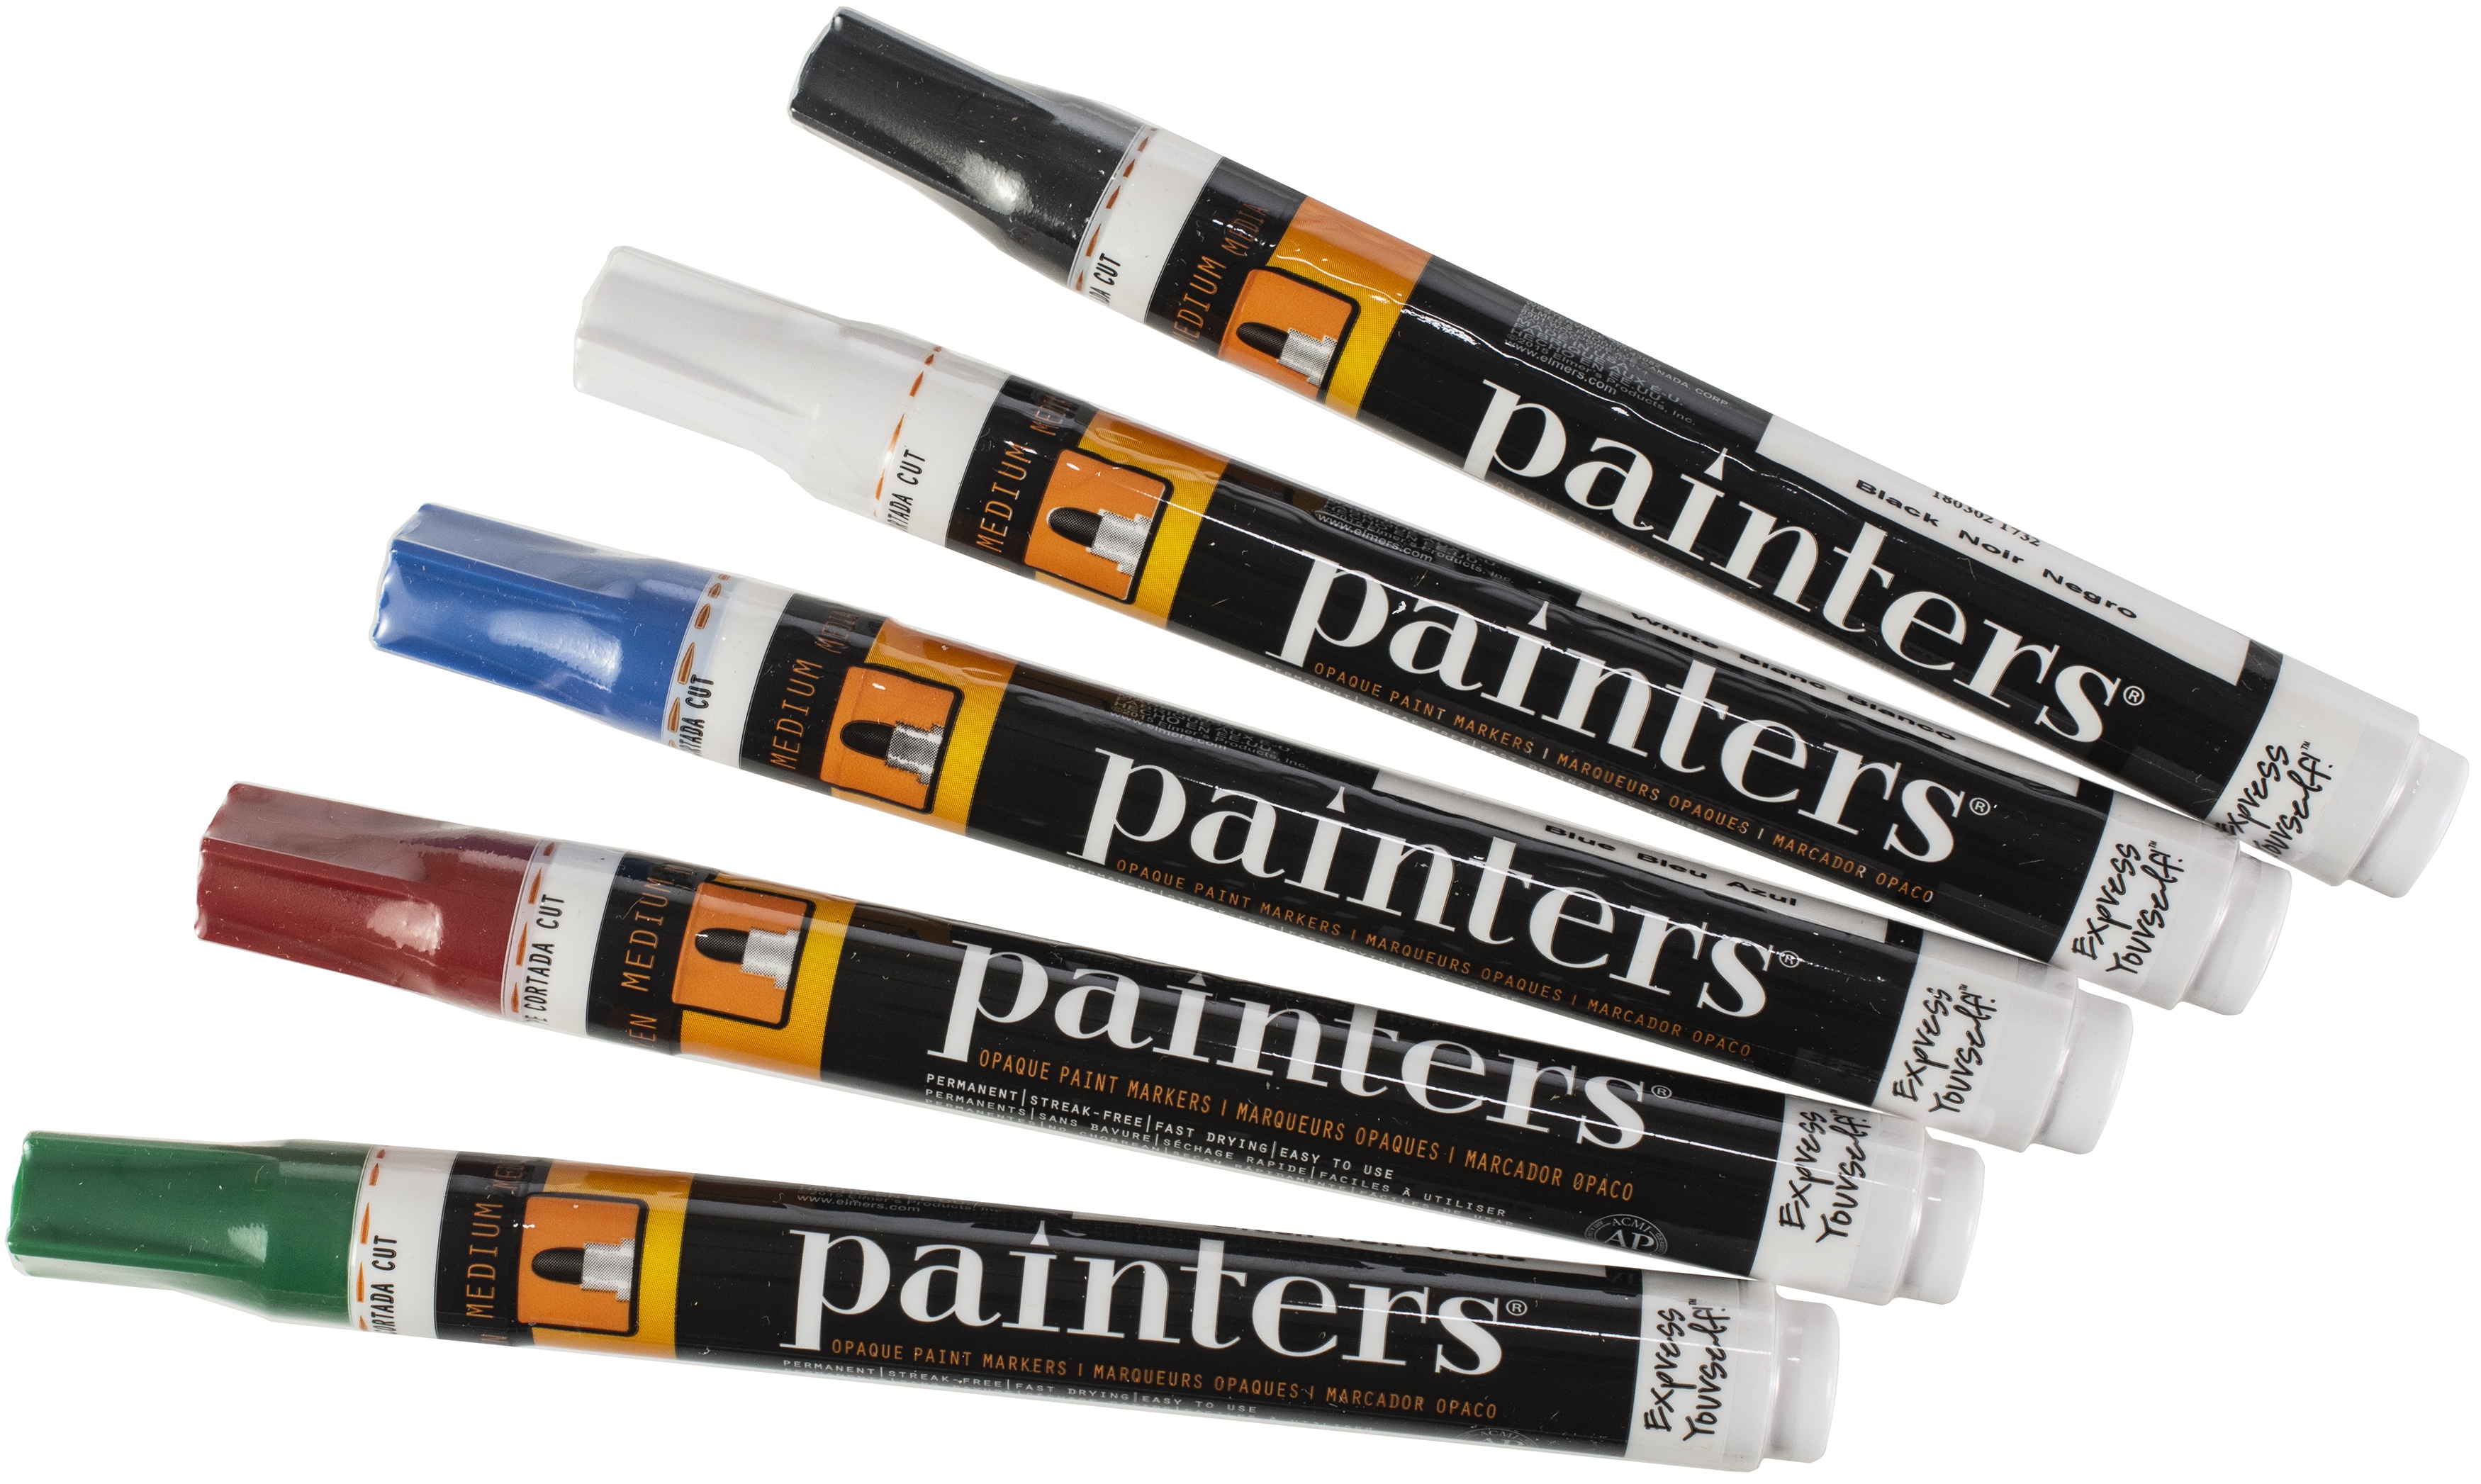 Painters Medium Point Assorted Color Permanent Paint Pens, 5 Count - image 1 of 3